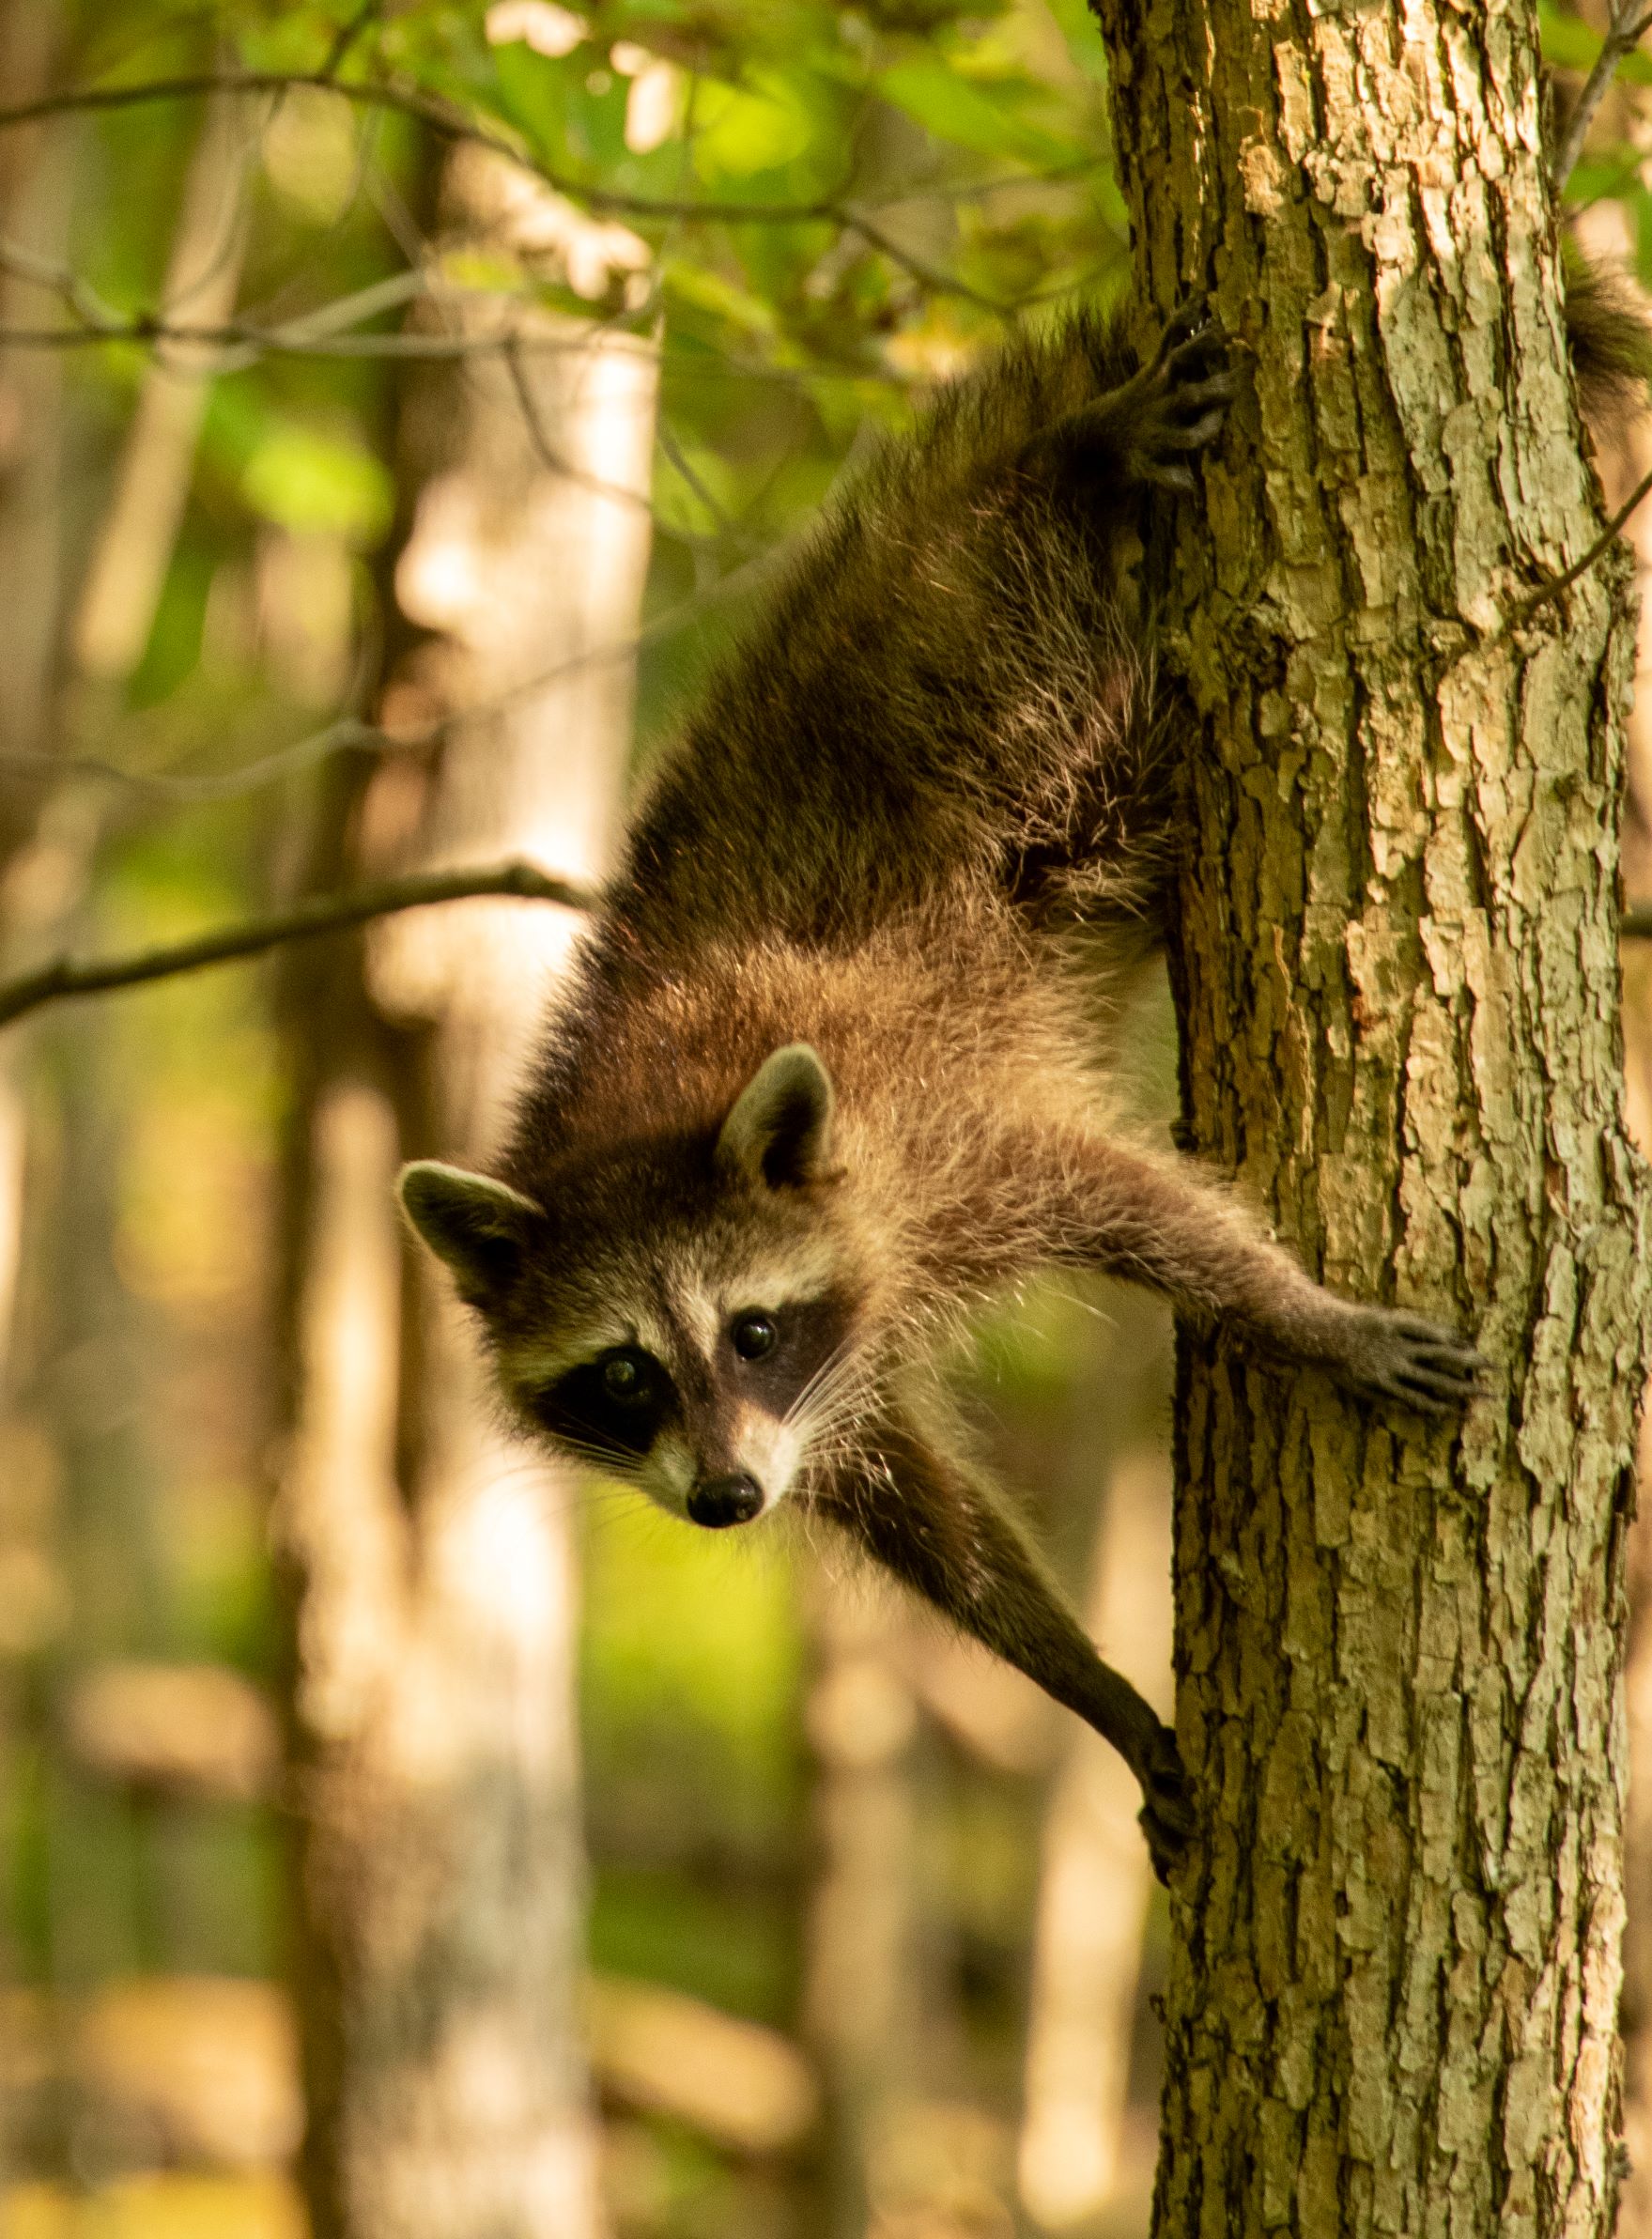 A young raccoon peeking around a tree